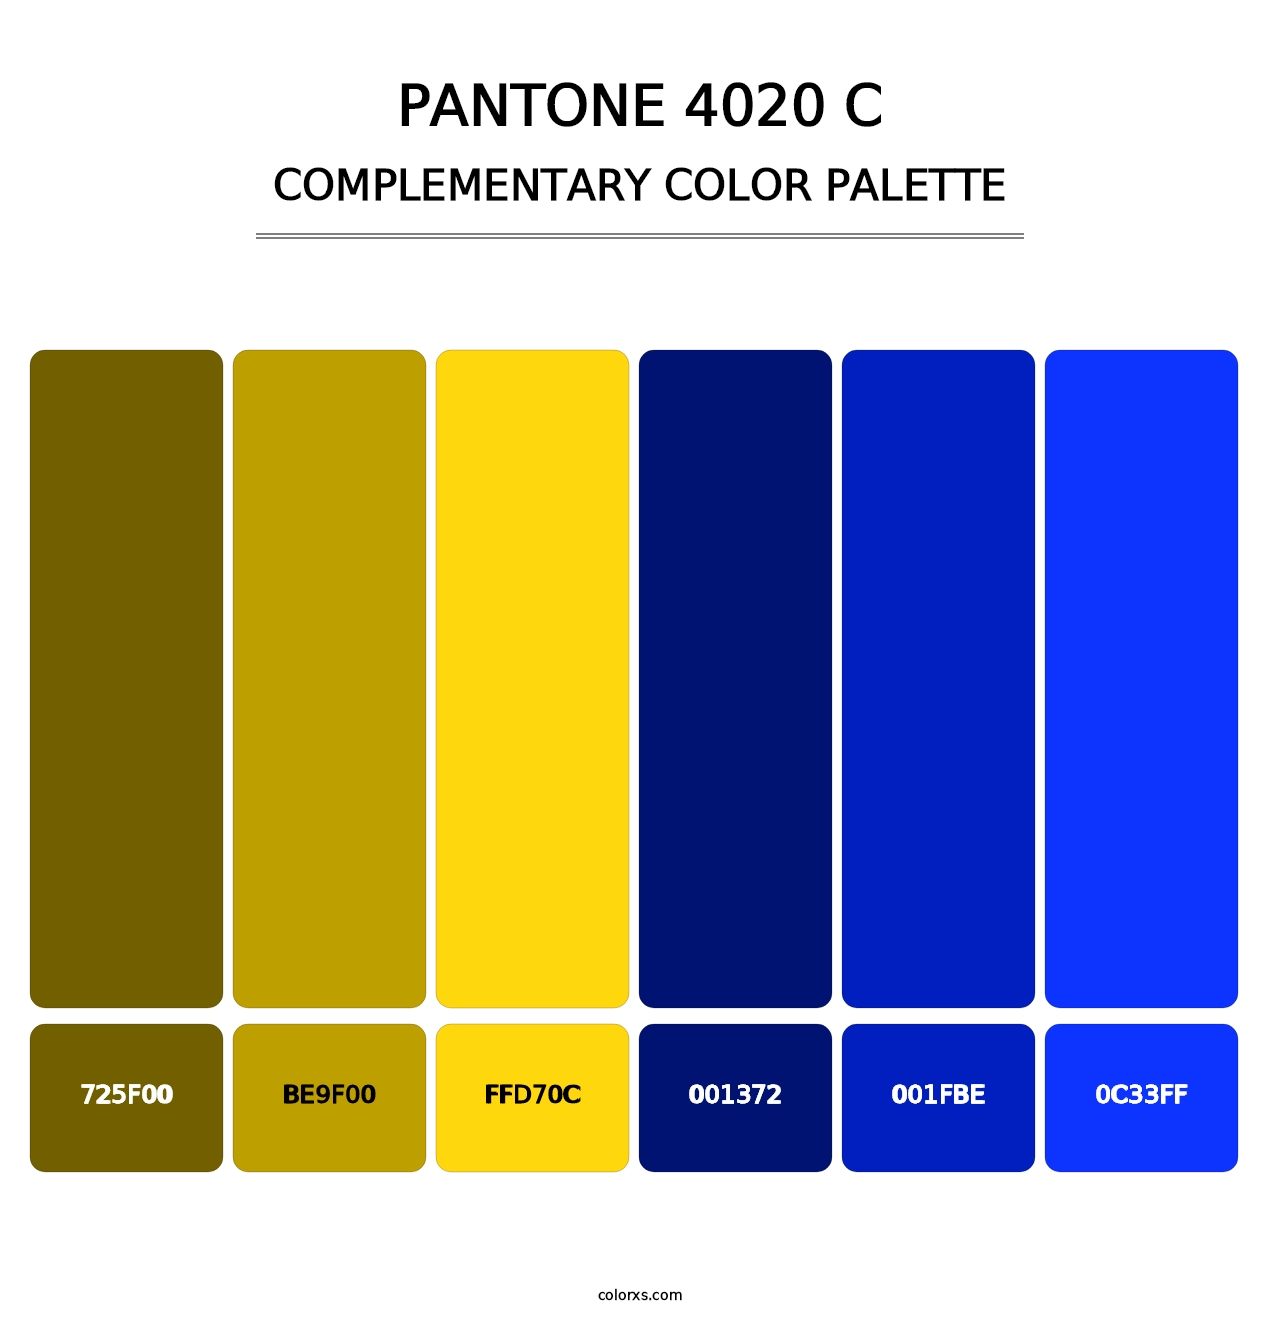 PANTONE 4020 C - Complementary Color Palette